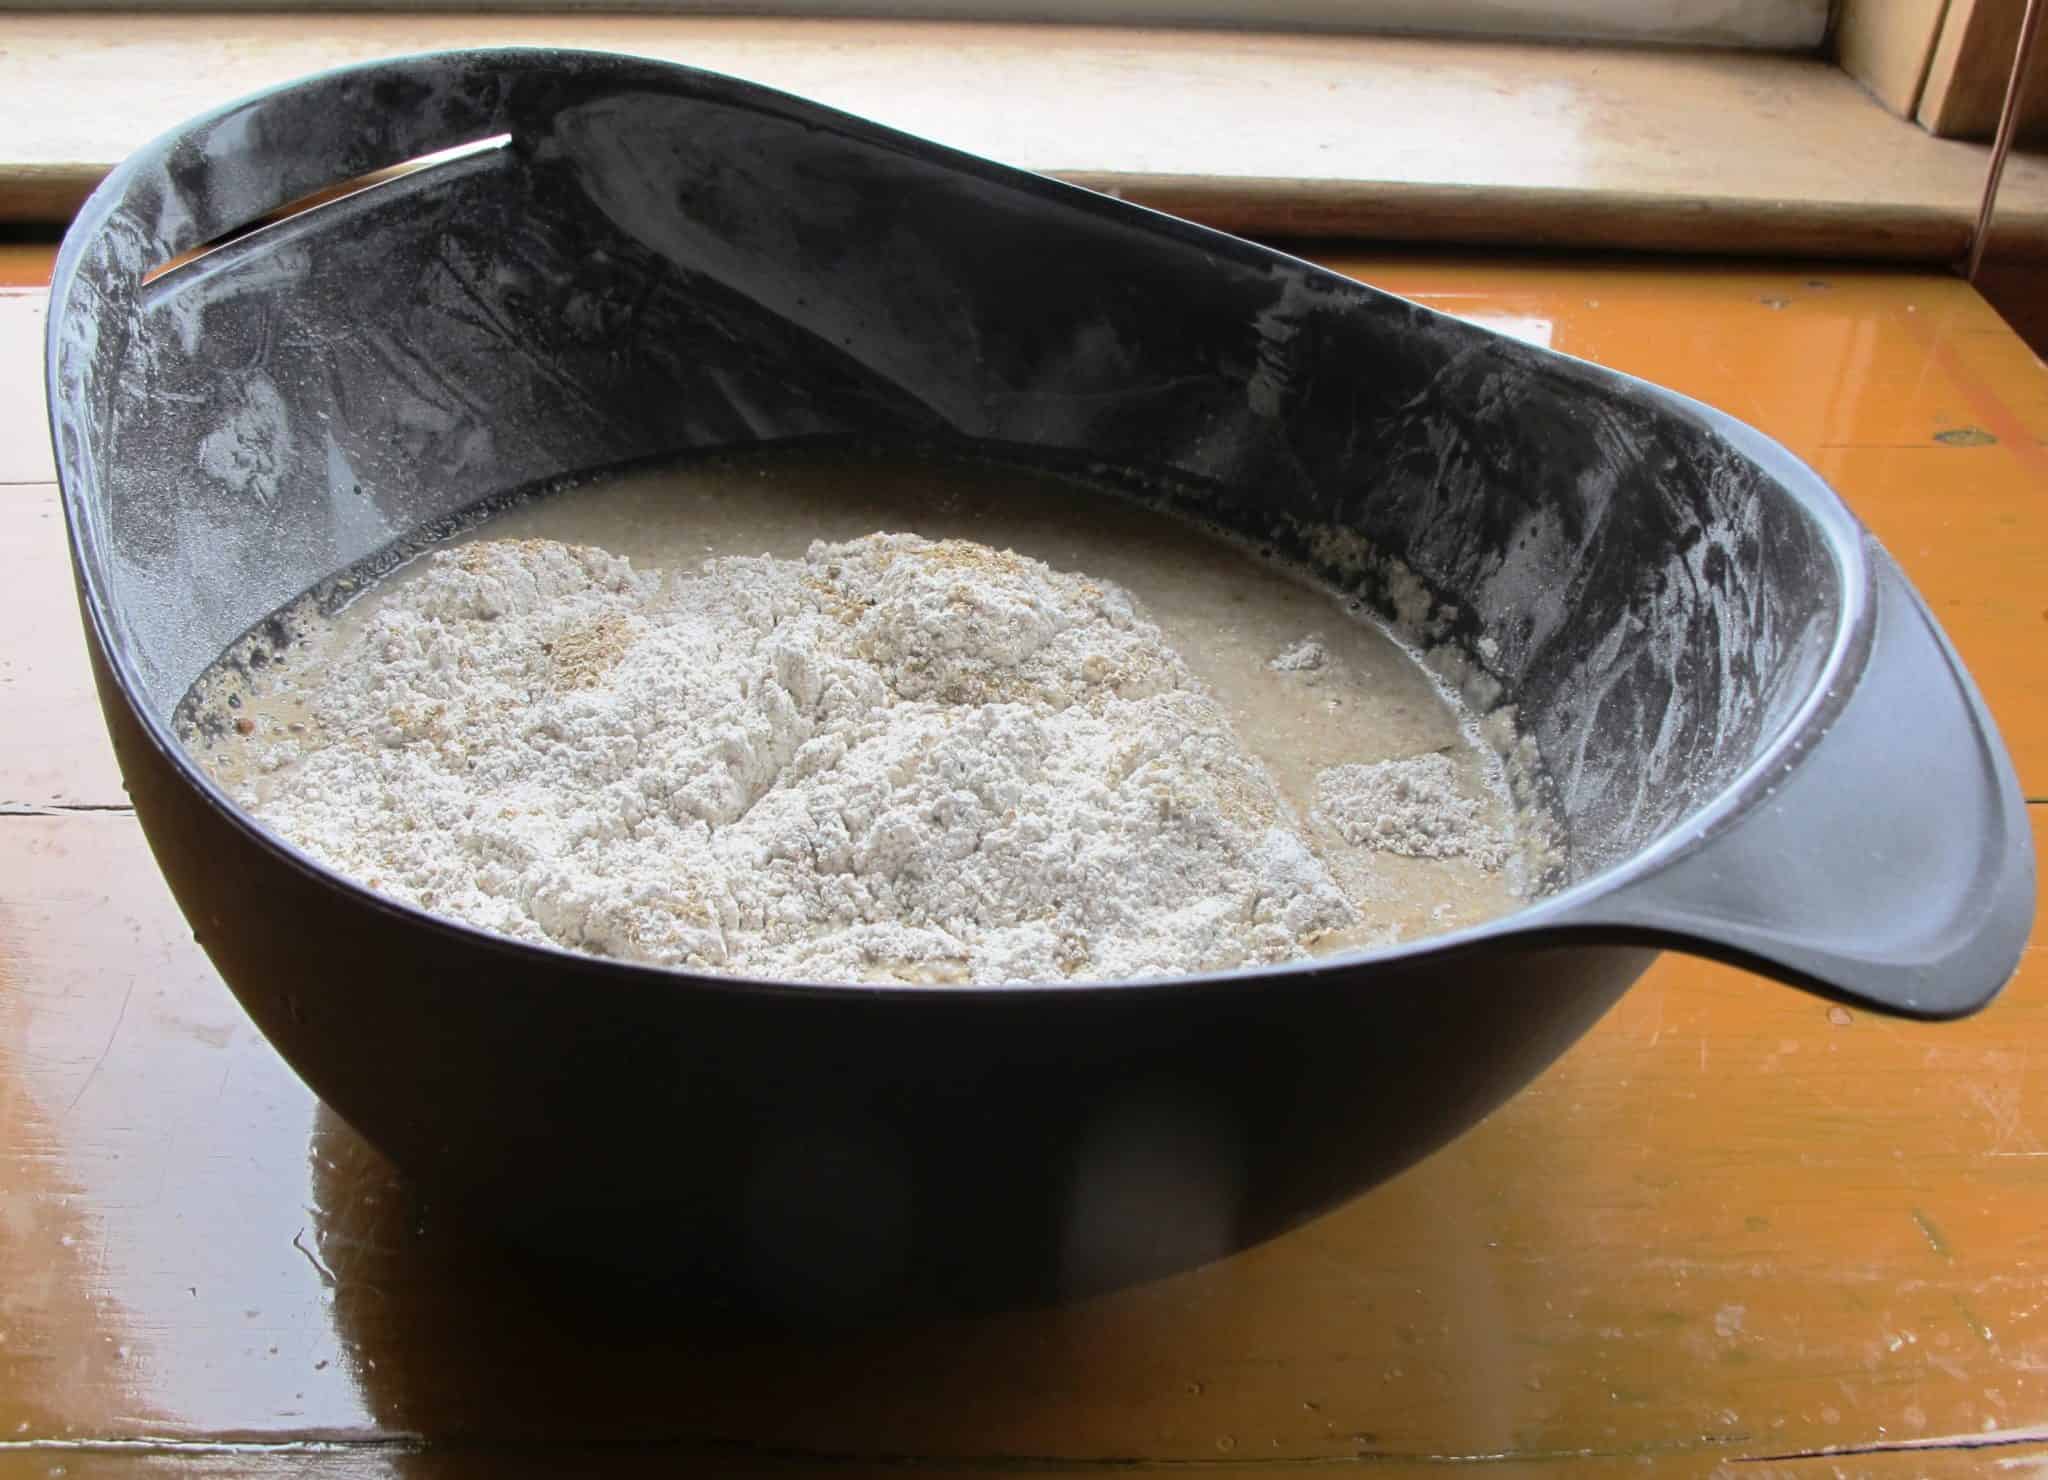 https://www.thebreadshebakes.com/wp-content/uploads/2014/03/Lekue-bread-maker-weighing-ingredients.jpg